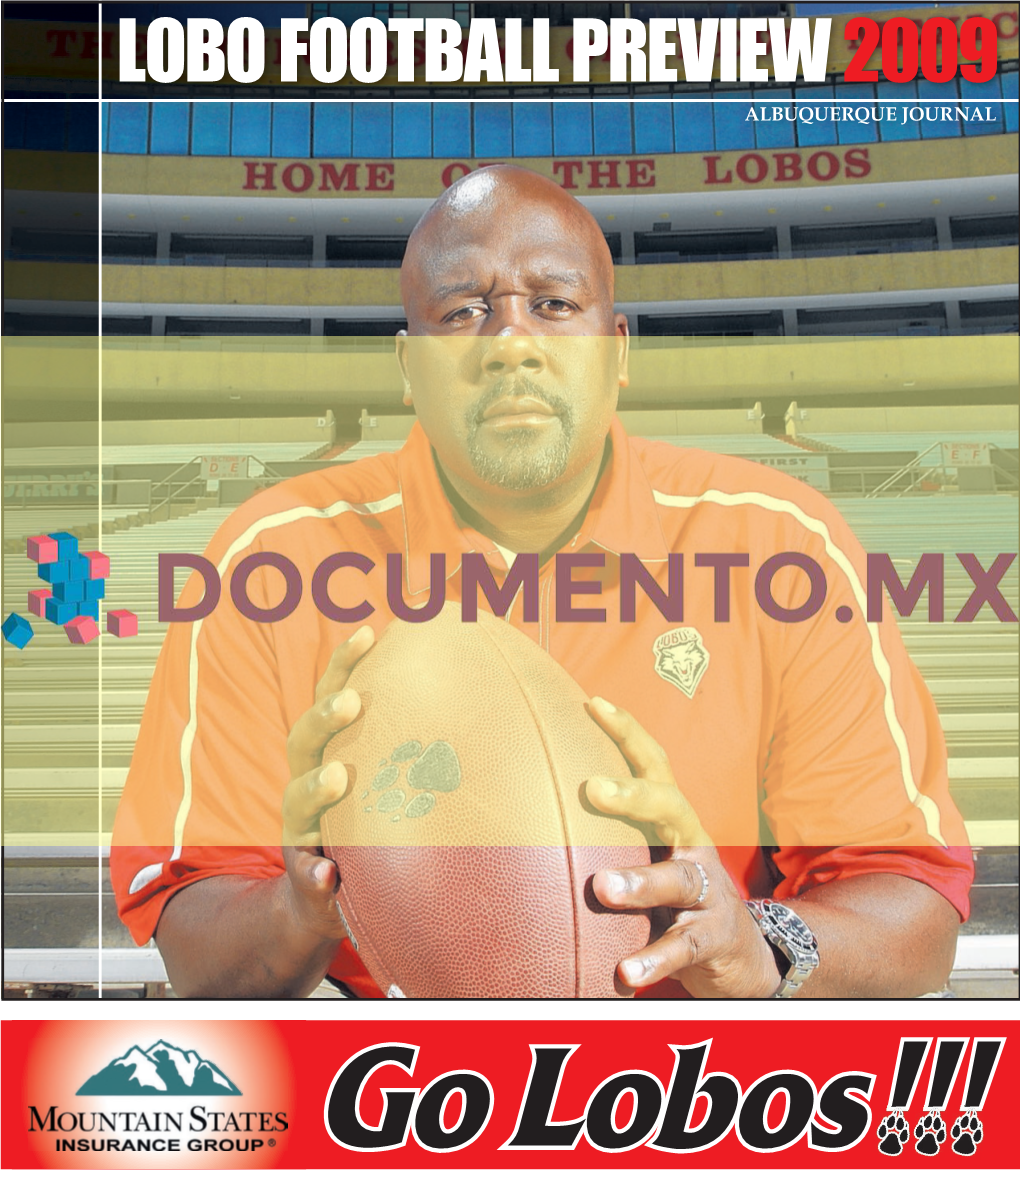 Lobo Football Preview 2009